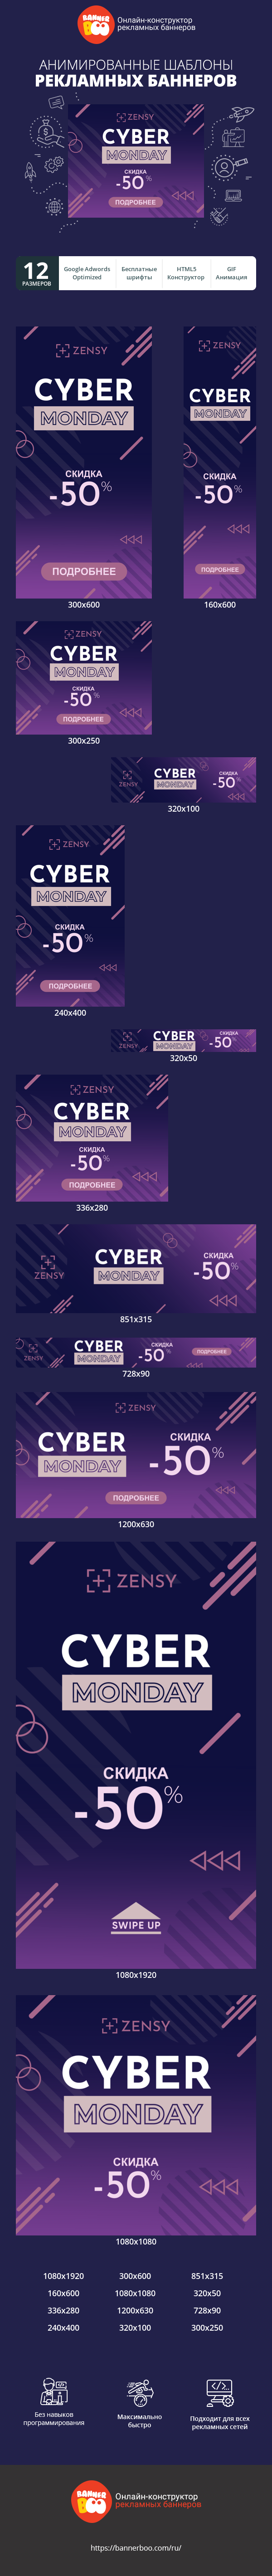 Шаблон рекламного баннера — Cyber Monday — скидка -50%